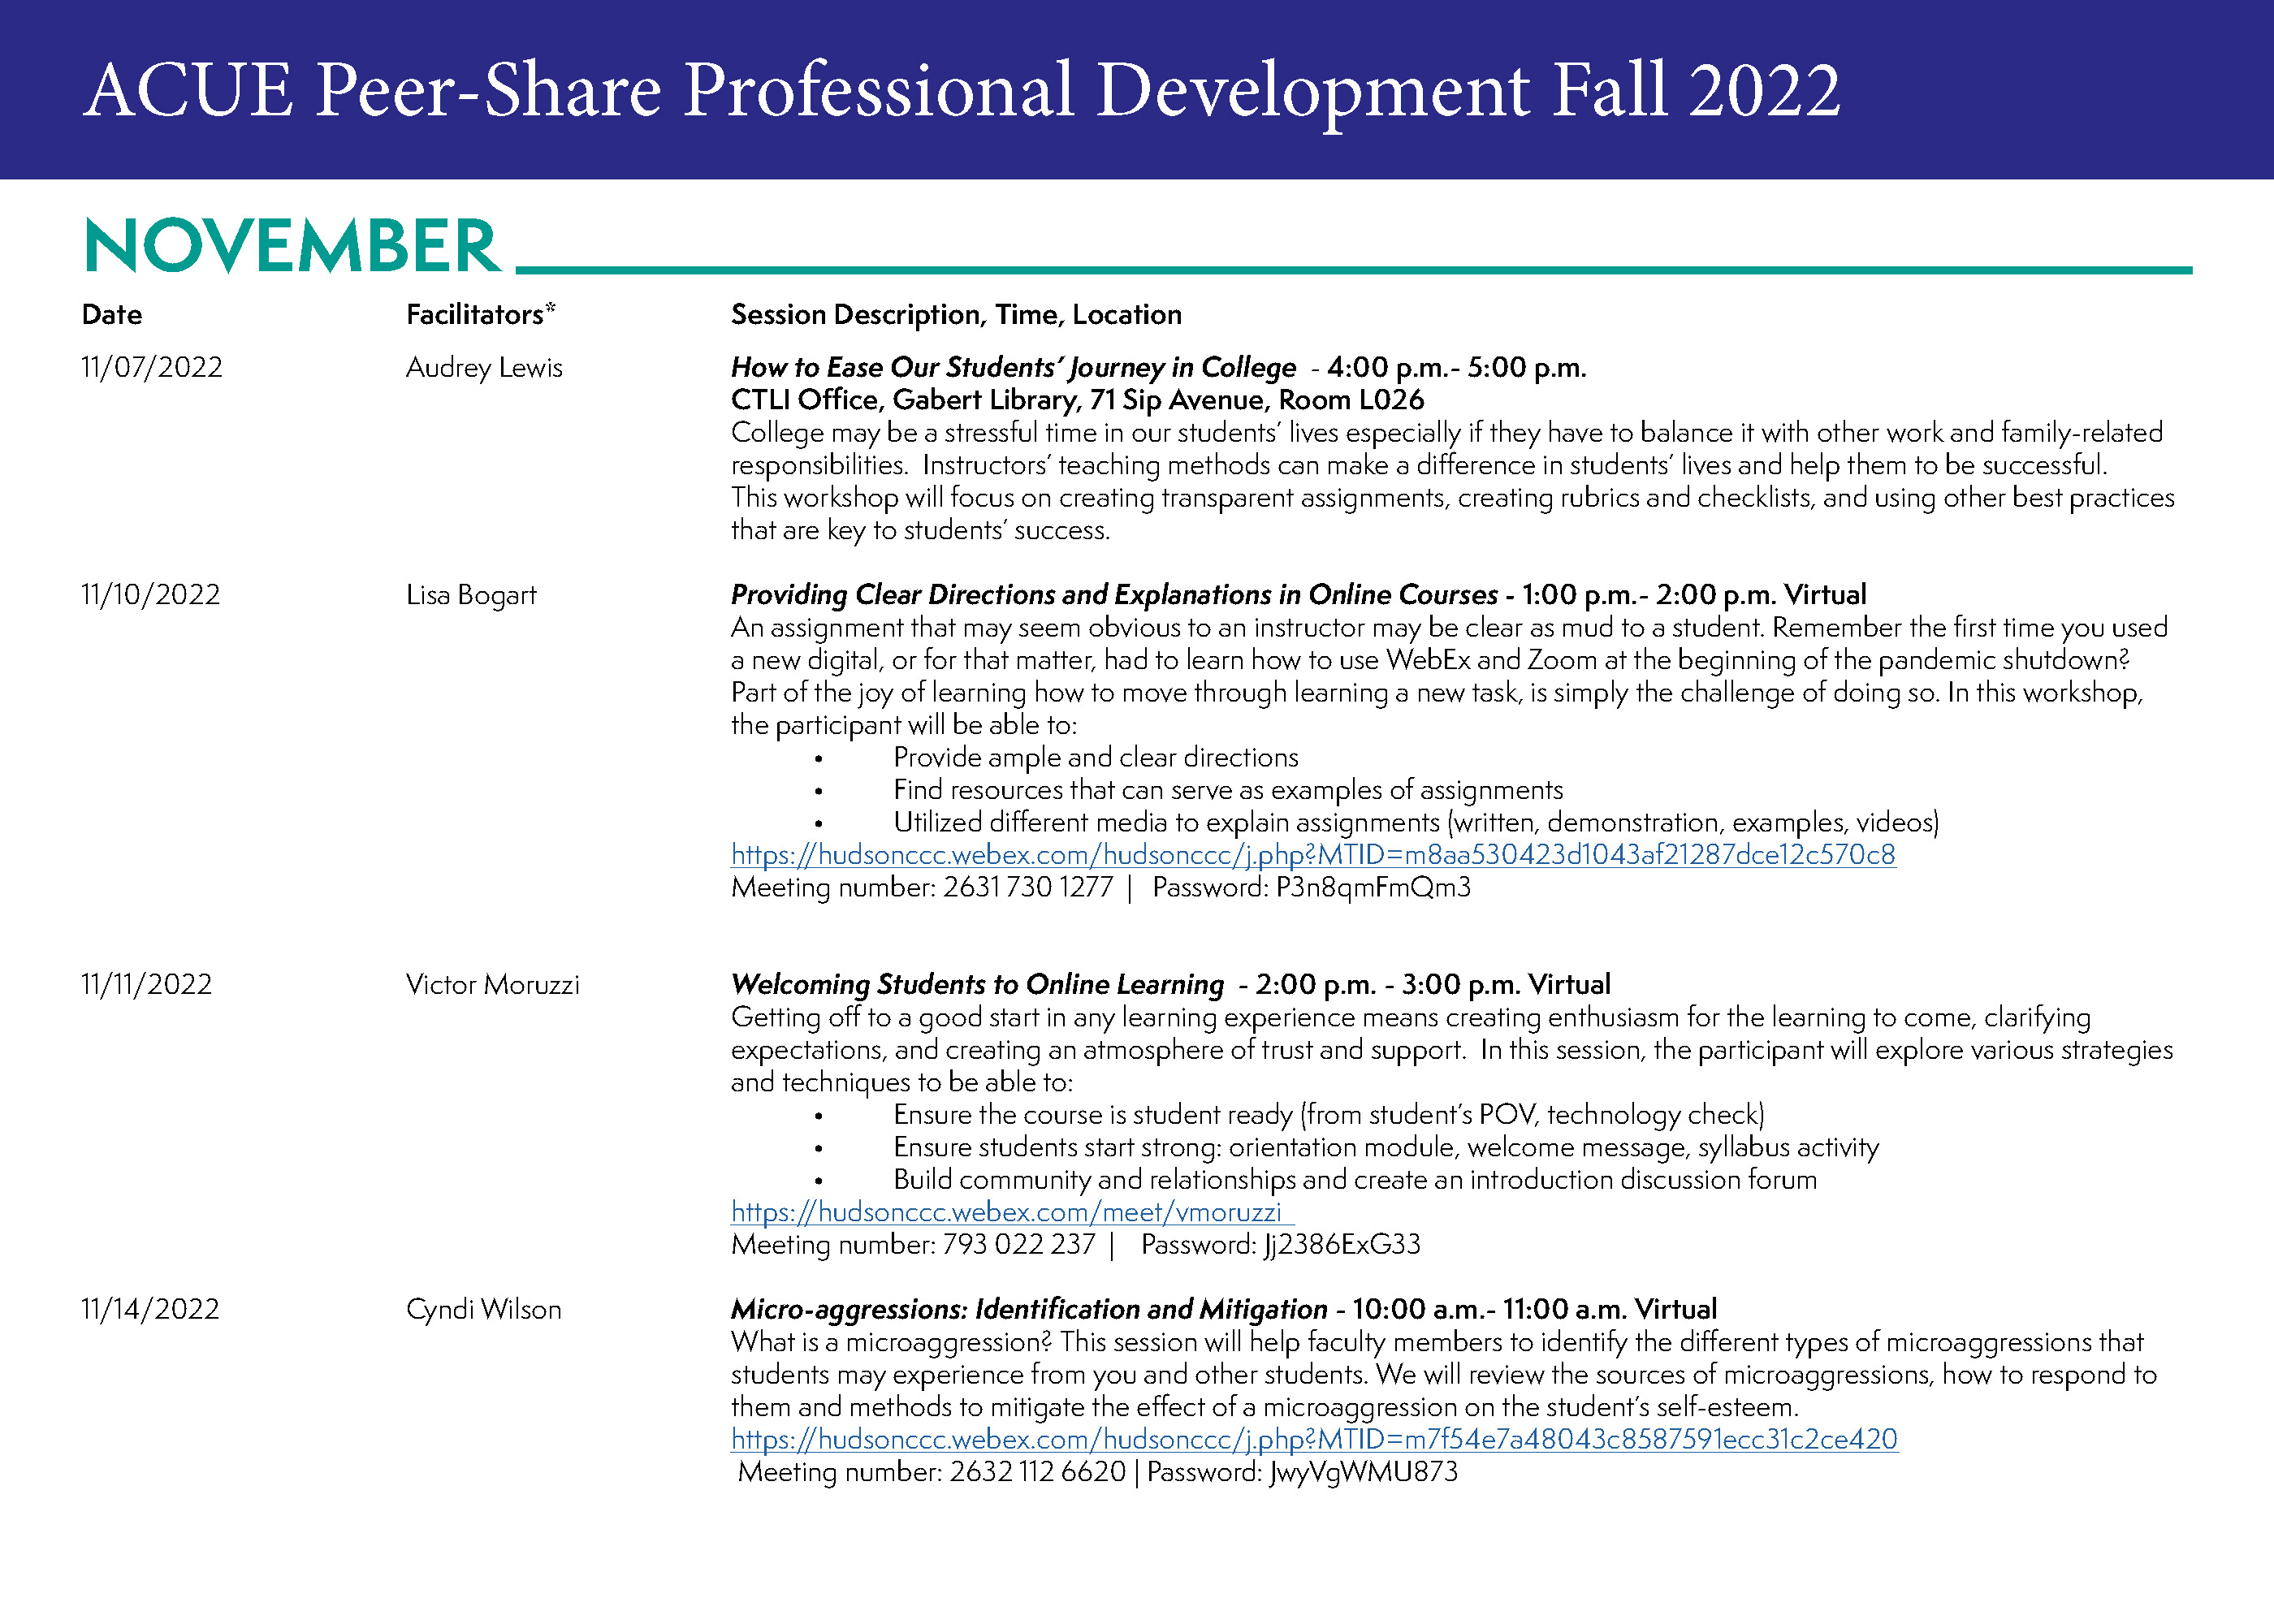 ACUE Peer-Share Professional Development Otoño 2022 - Calendario de noviembre